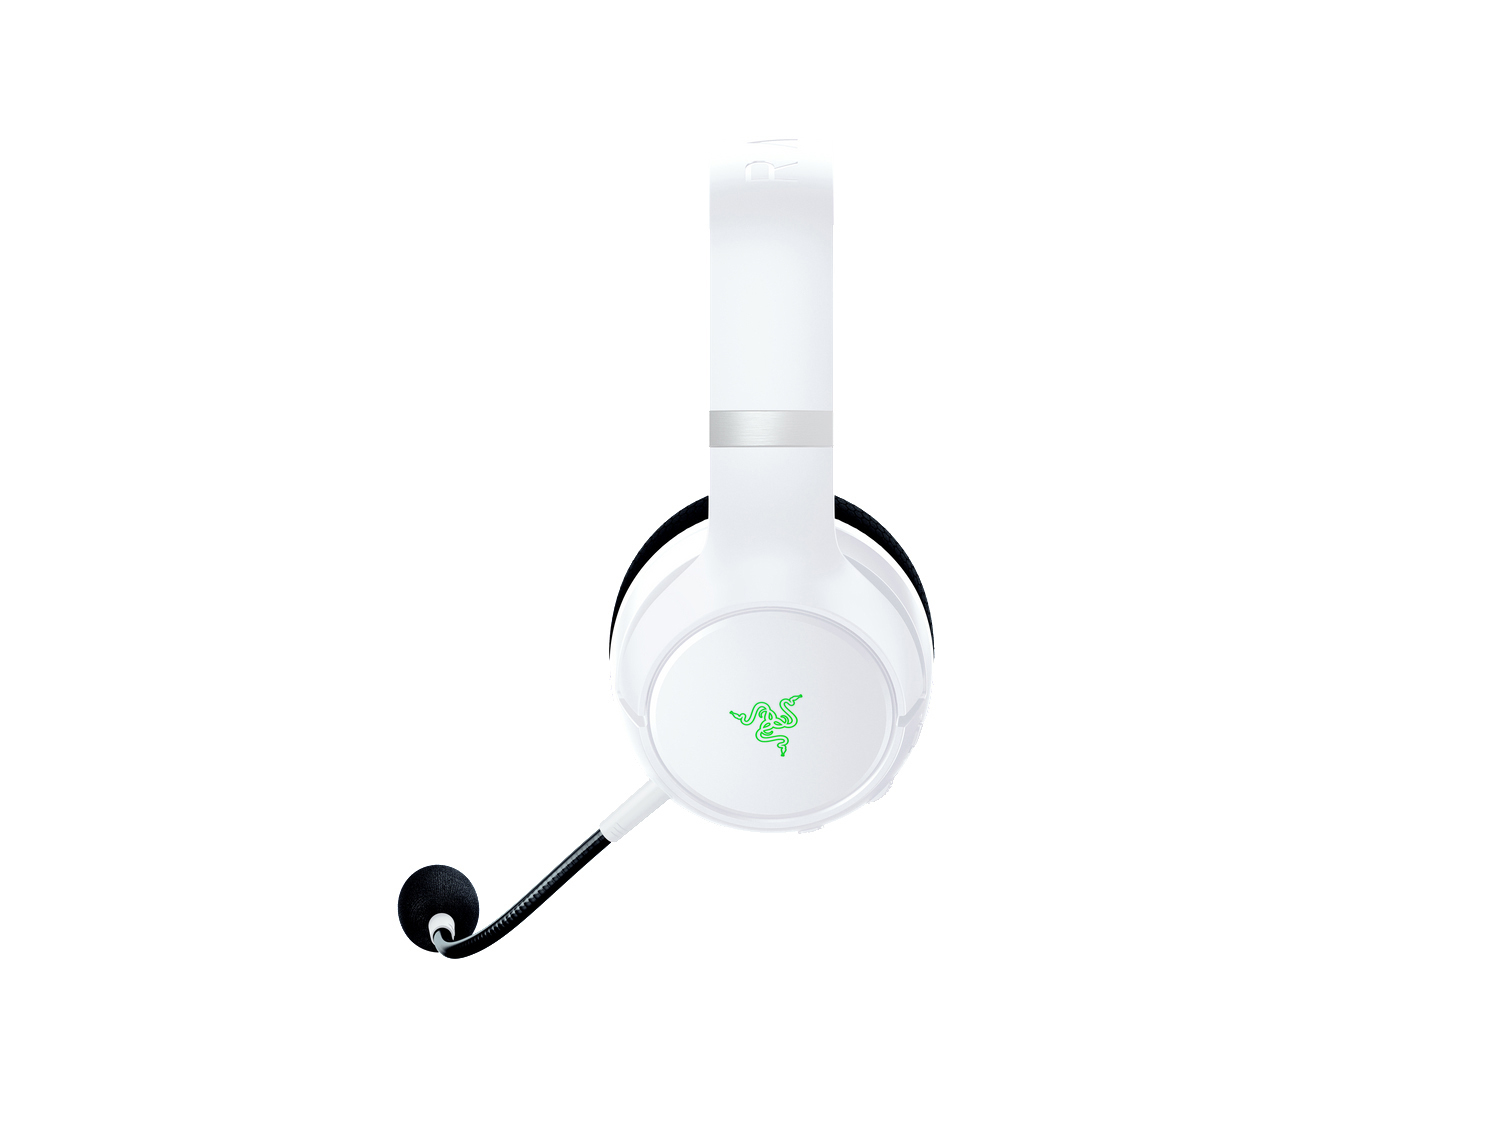 RAZER Weiß Kaira Over-ear X|S Wireless, Gaming Pro -Series Headset Bluetooth for Xbox